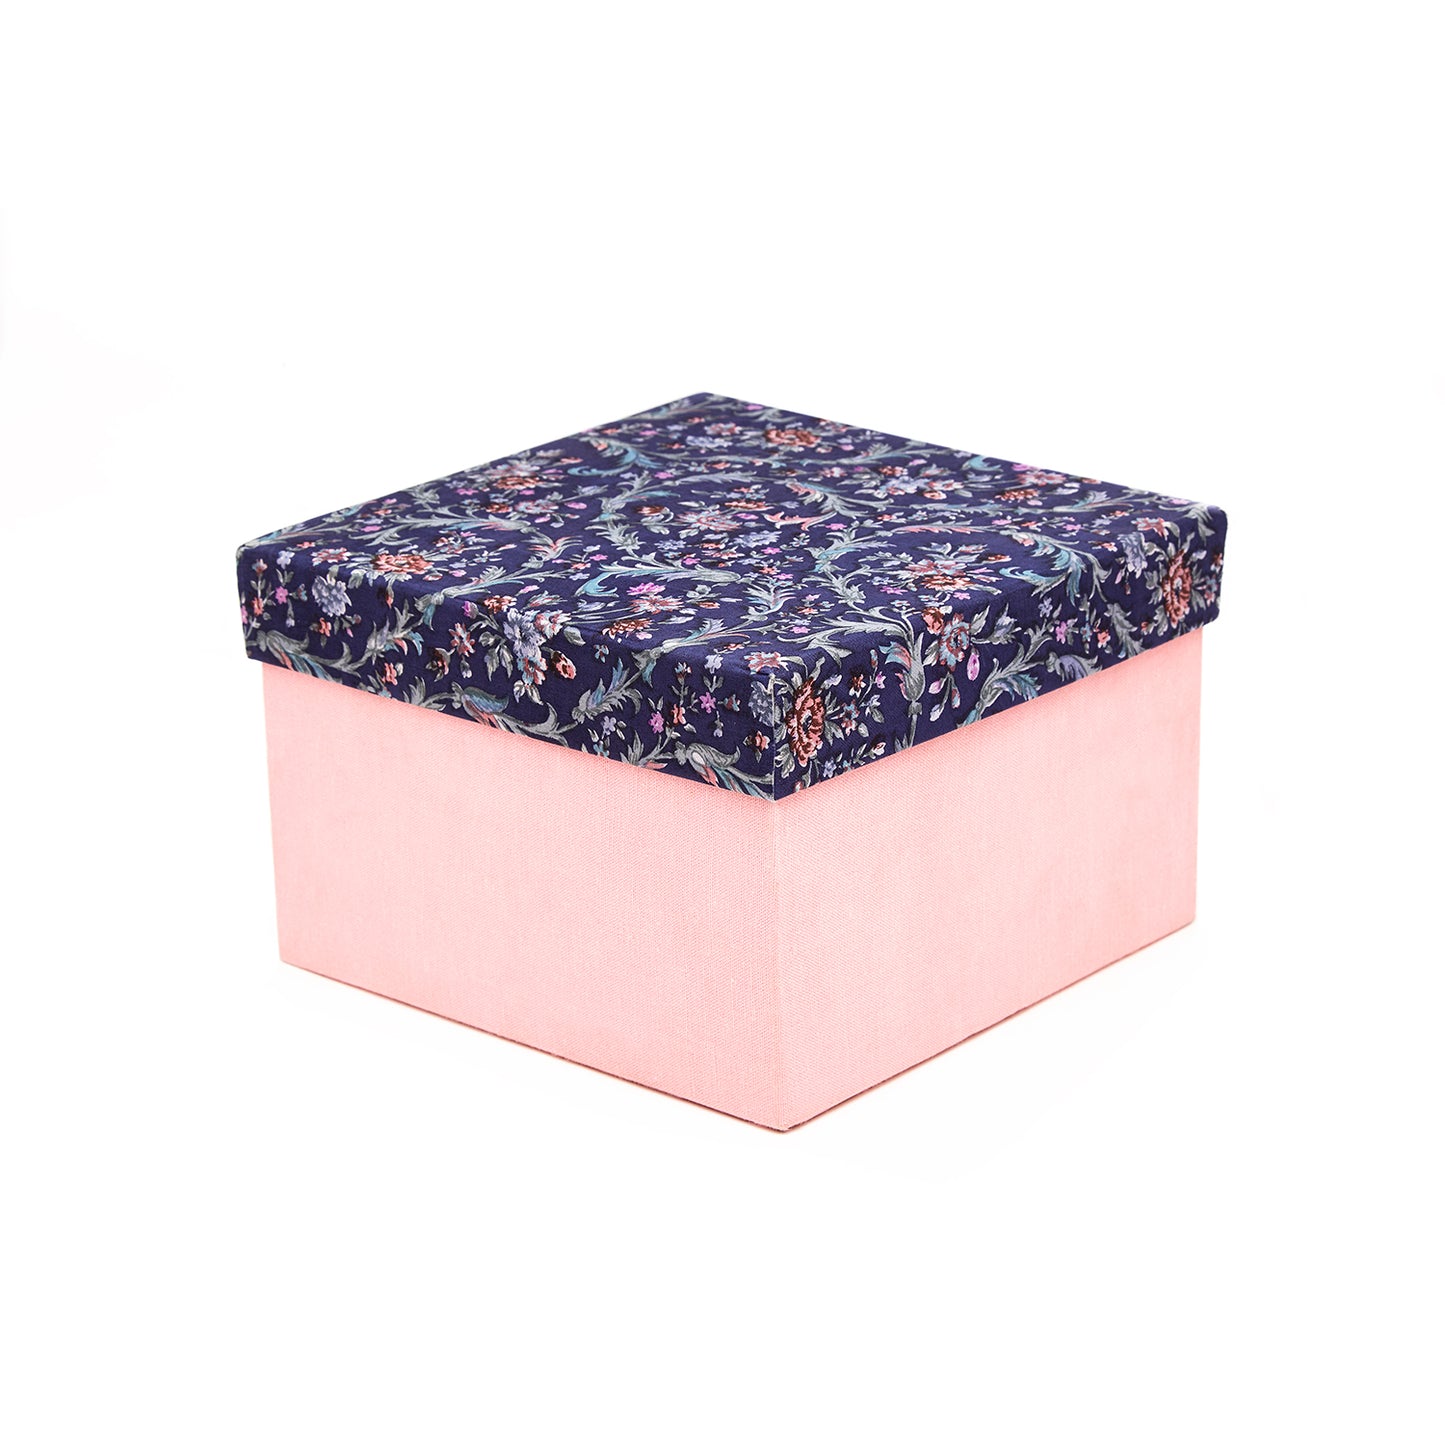 Flower Design on a Indigo Blue with Blush Pink -Gift Box Set of 6